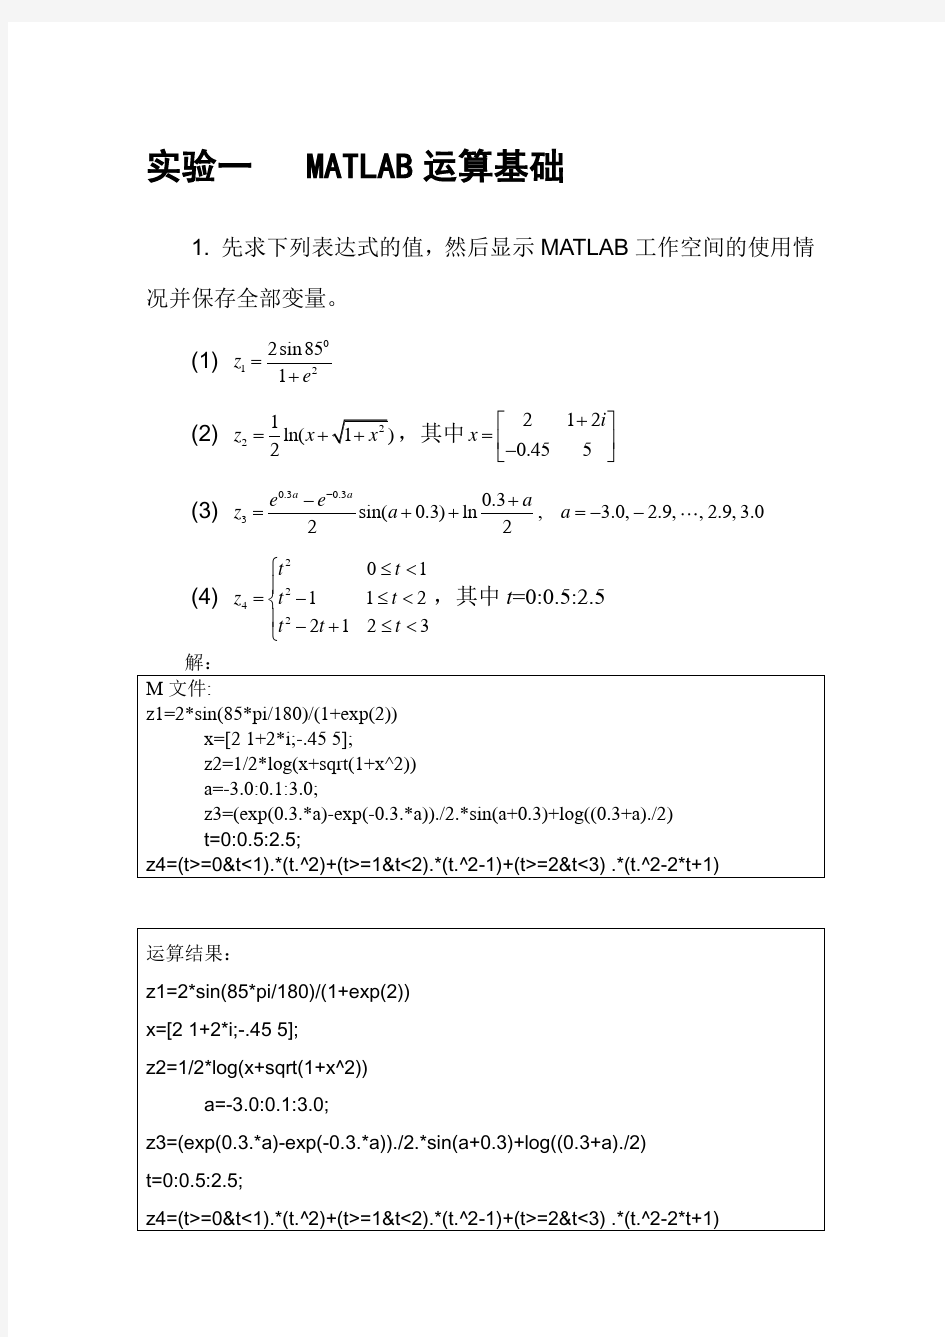 MATLAB程序设计与应用(刘卫国编)课后实验答案